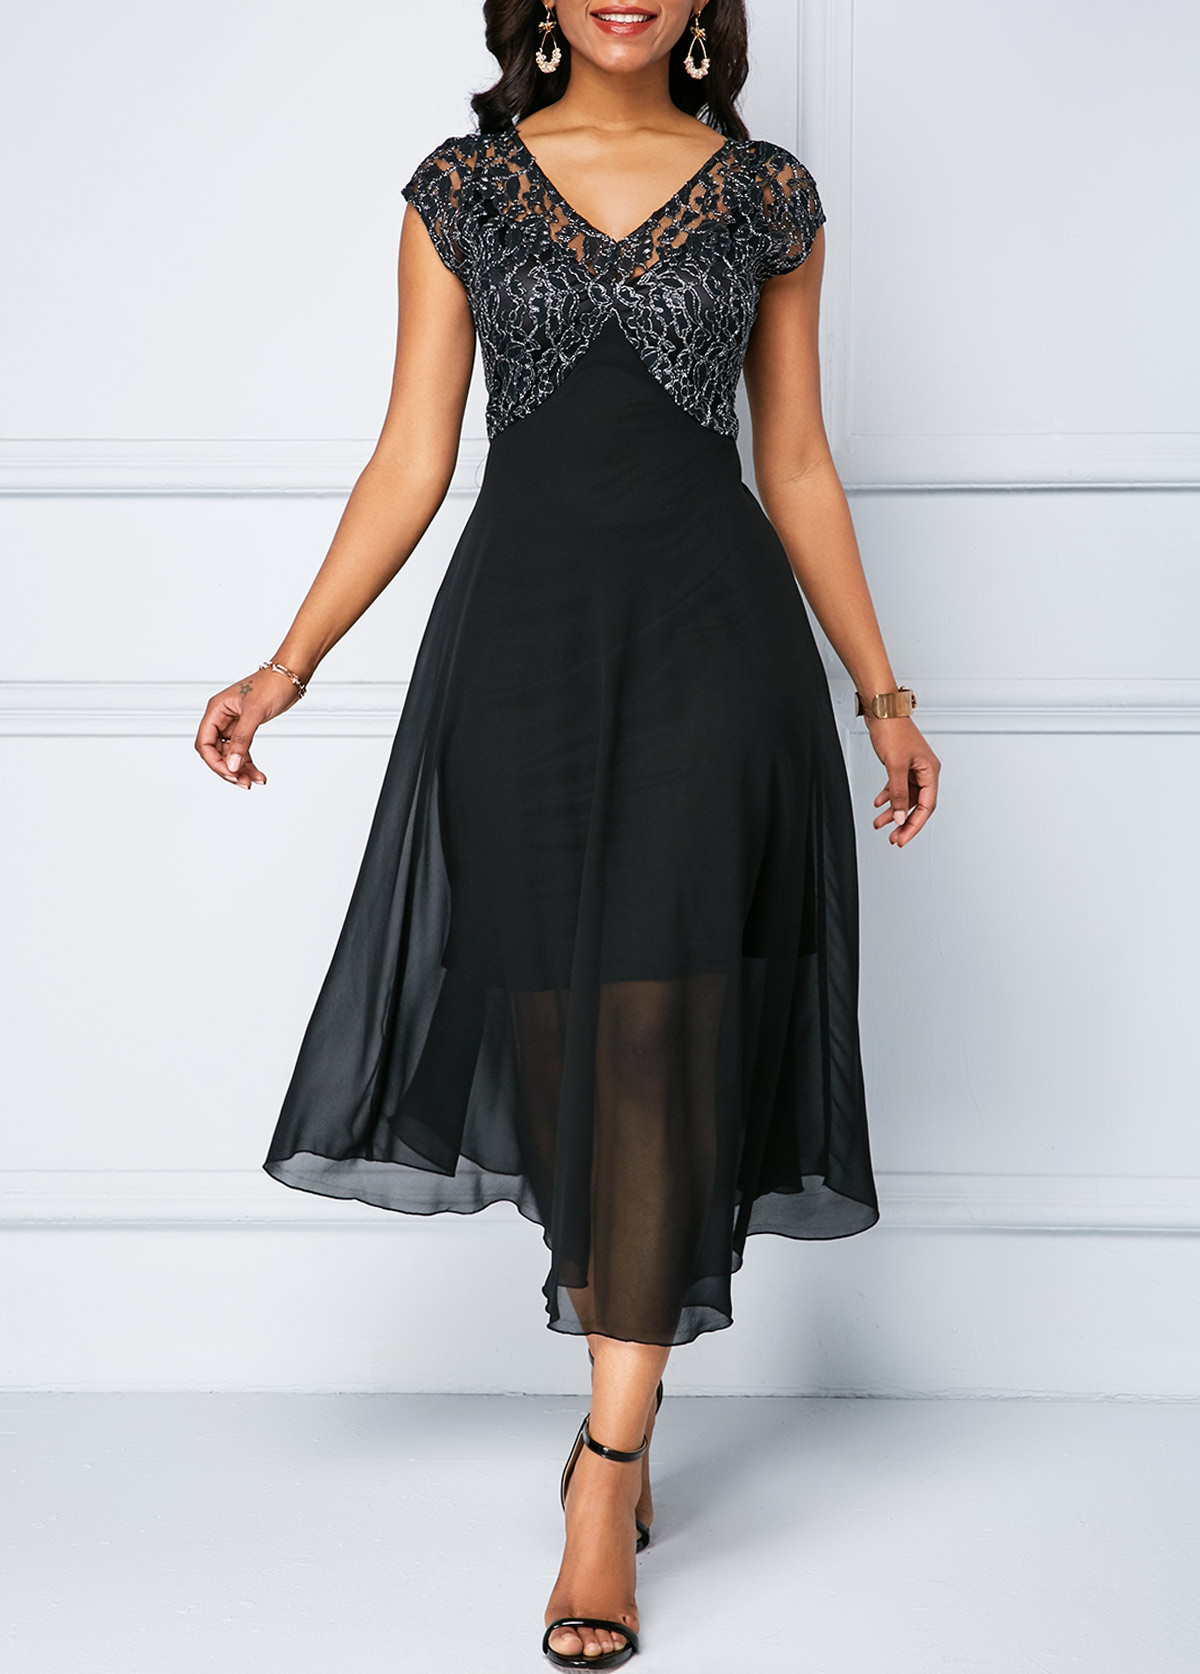 black satin floor length dress